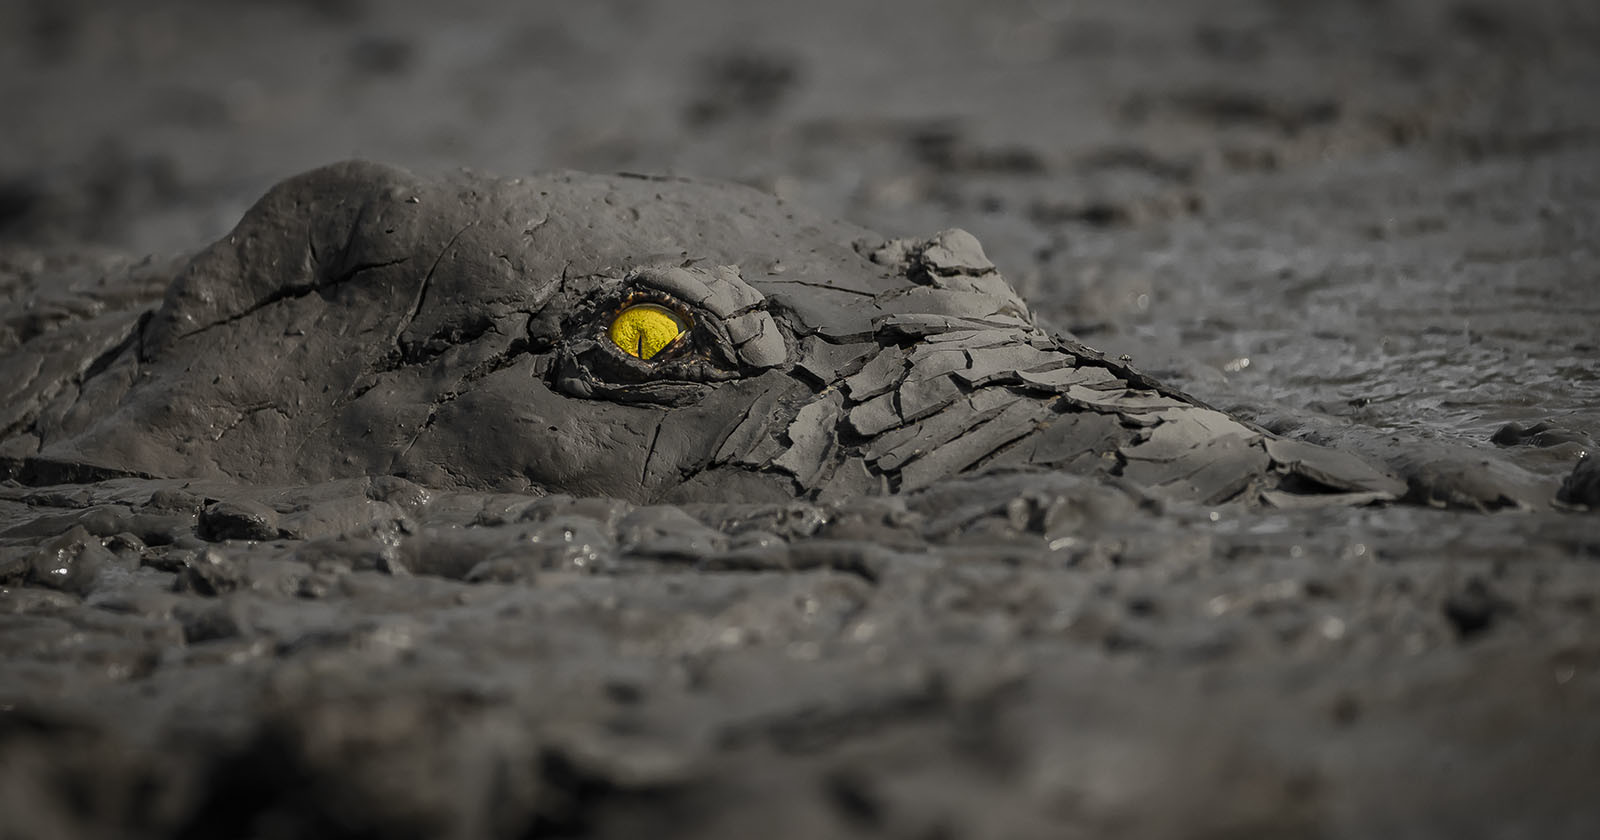  camouflaged crocodile portrait wins world nature photography awards 